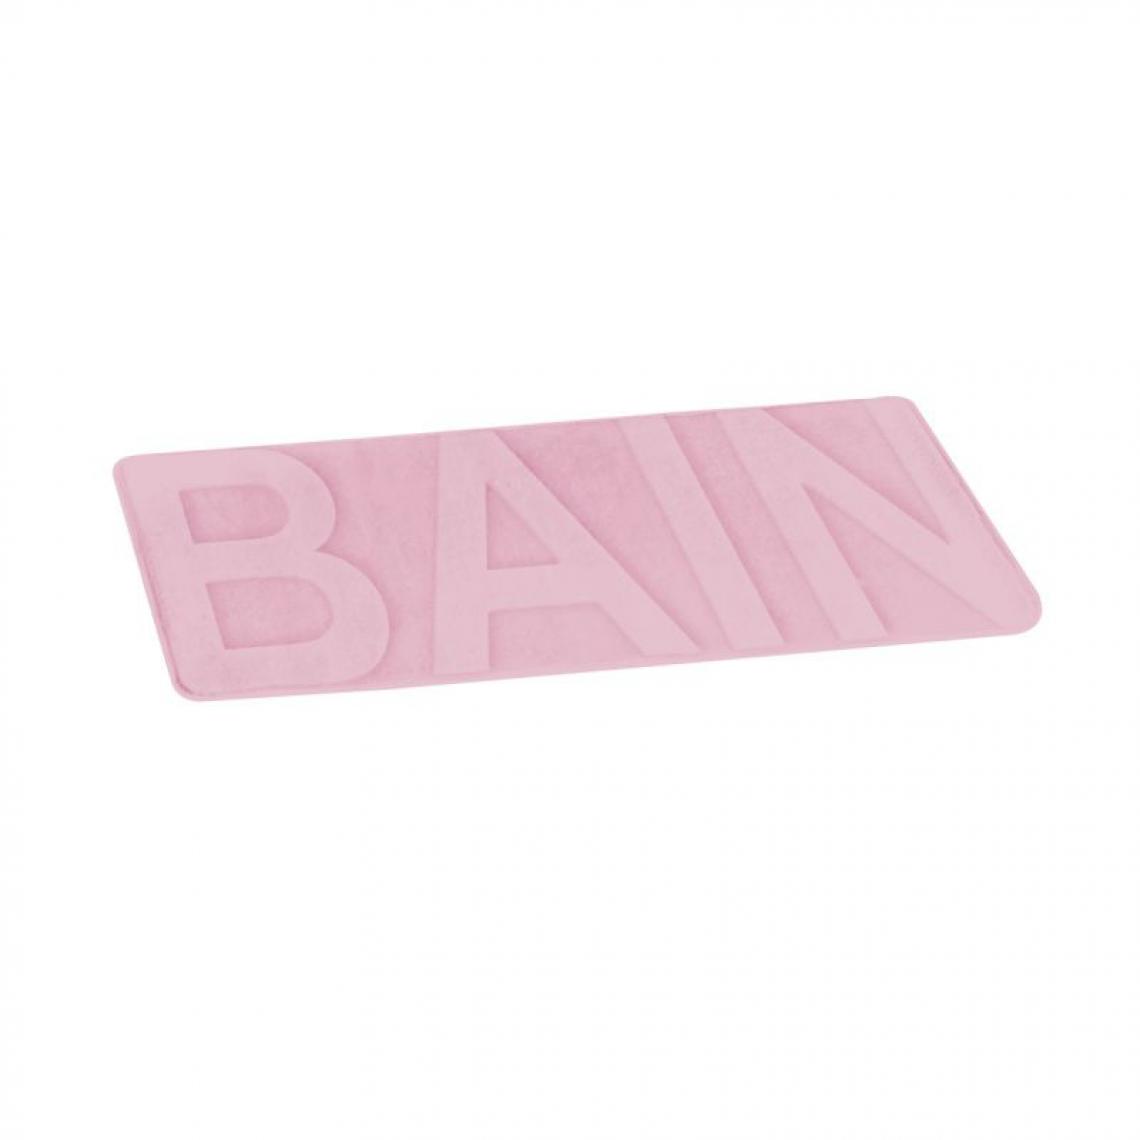 Paris Prix - Tapis de Bain Microfibre Relief 45x75cm Rose - Tapis